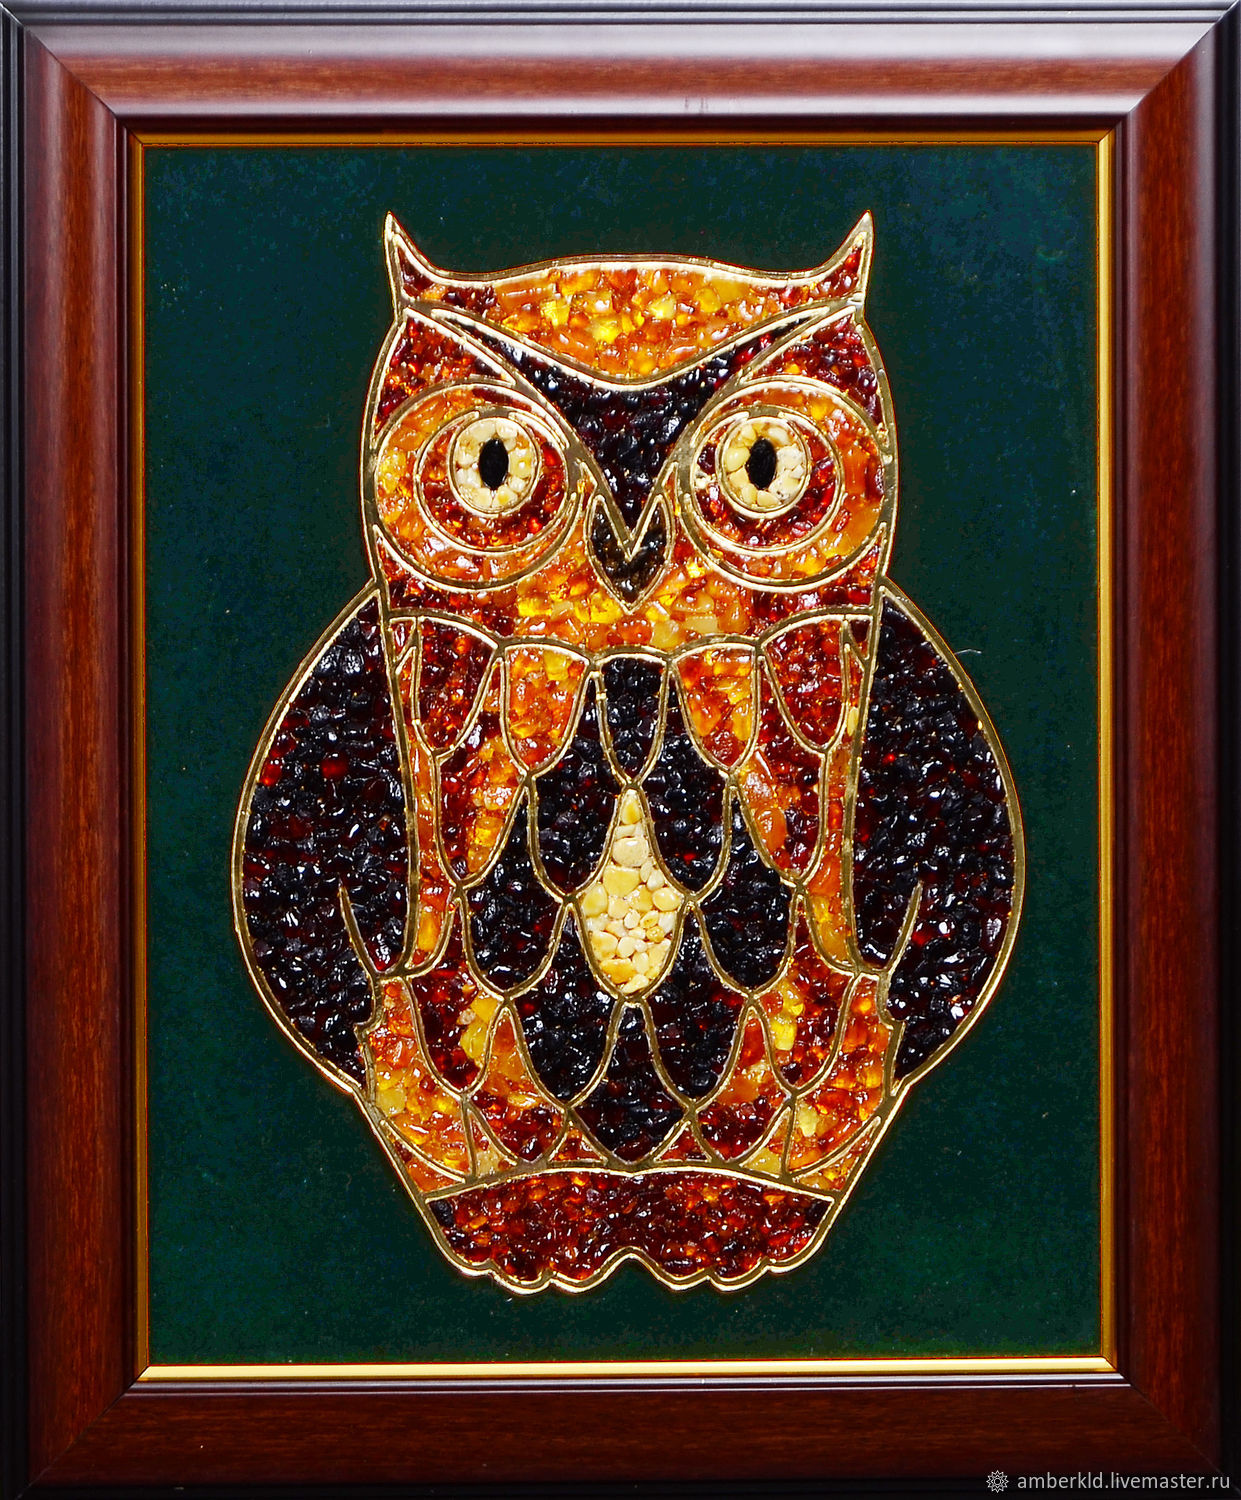 The amber Owl. Handmade. Gift student, gift for student, gift for teacher's day. A symbol of wisdom. Teacher's Day.
